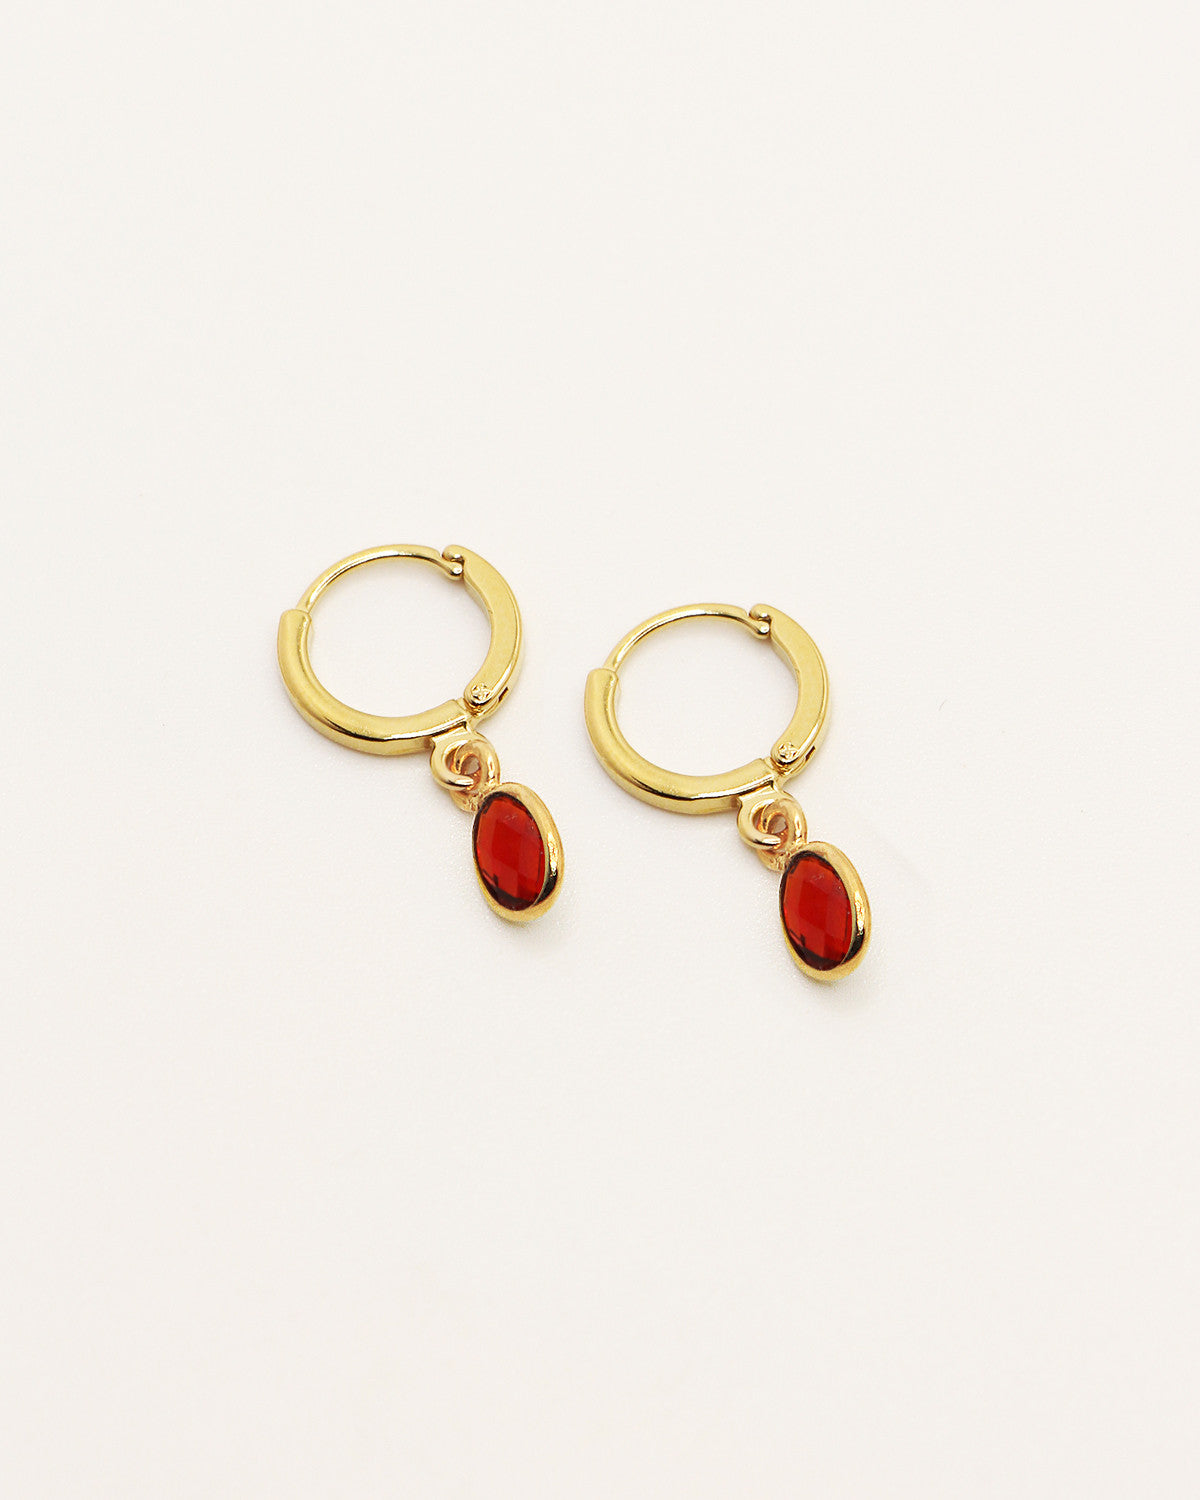 Gaia earrings